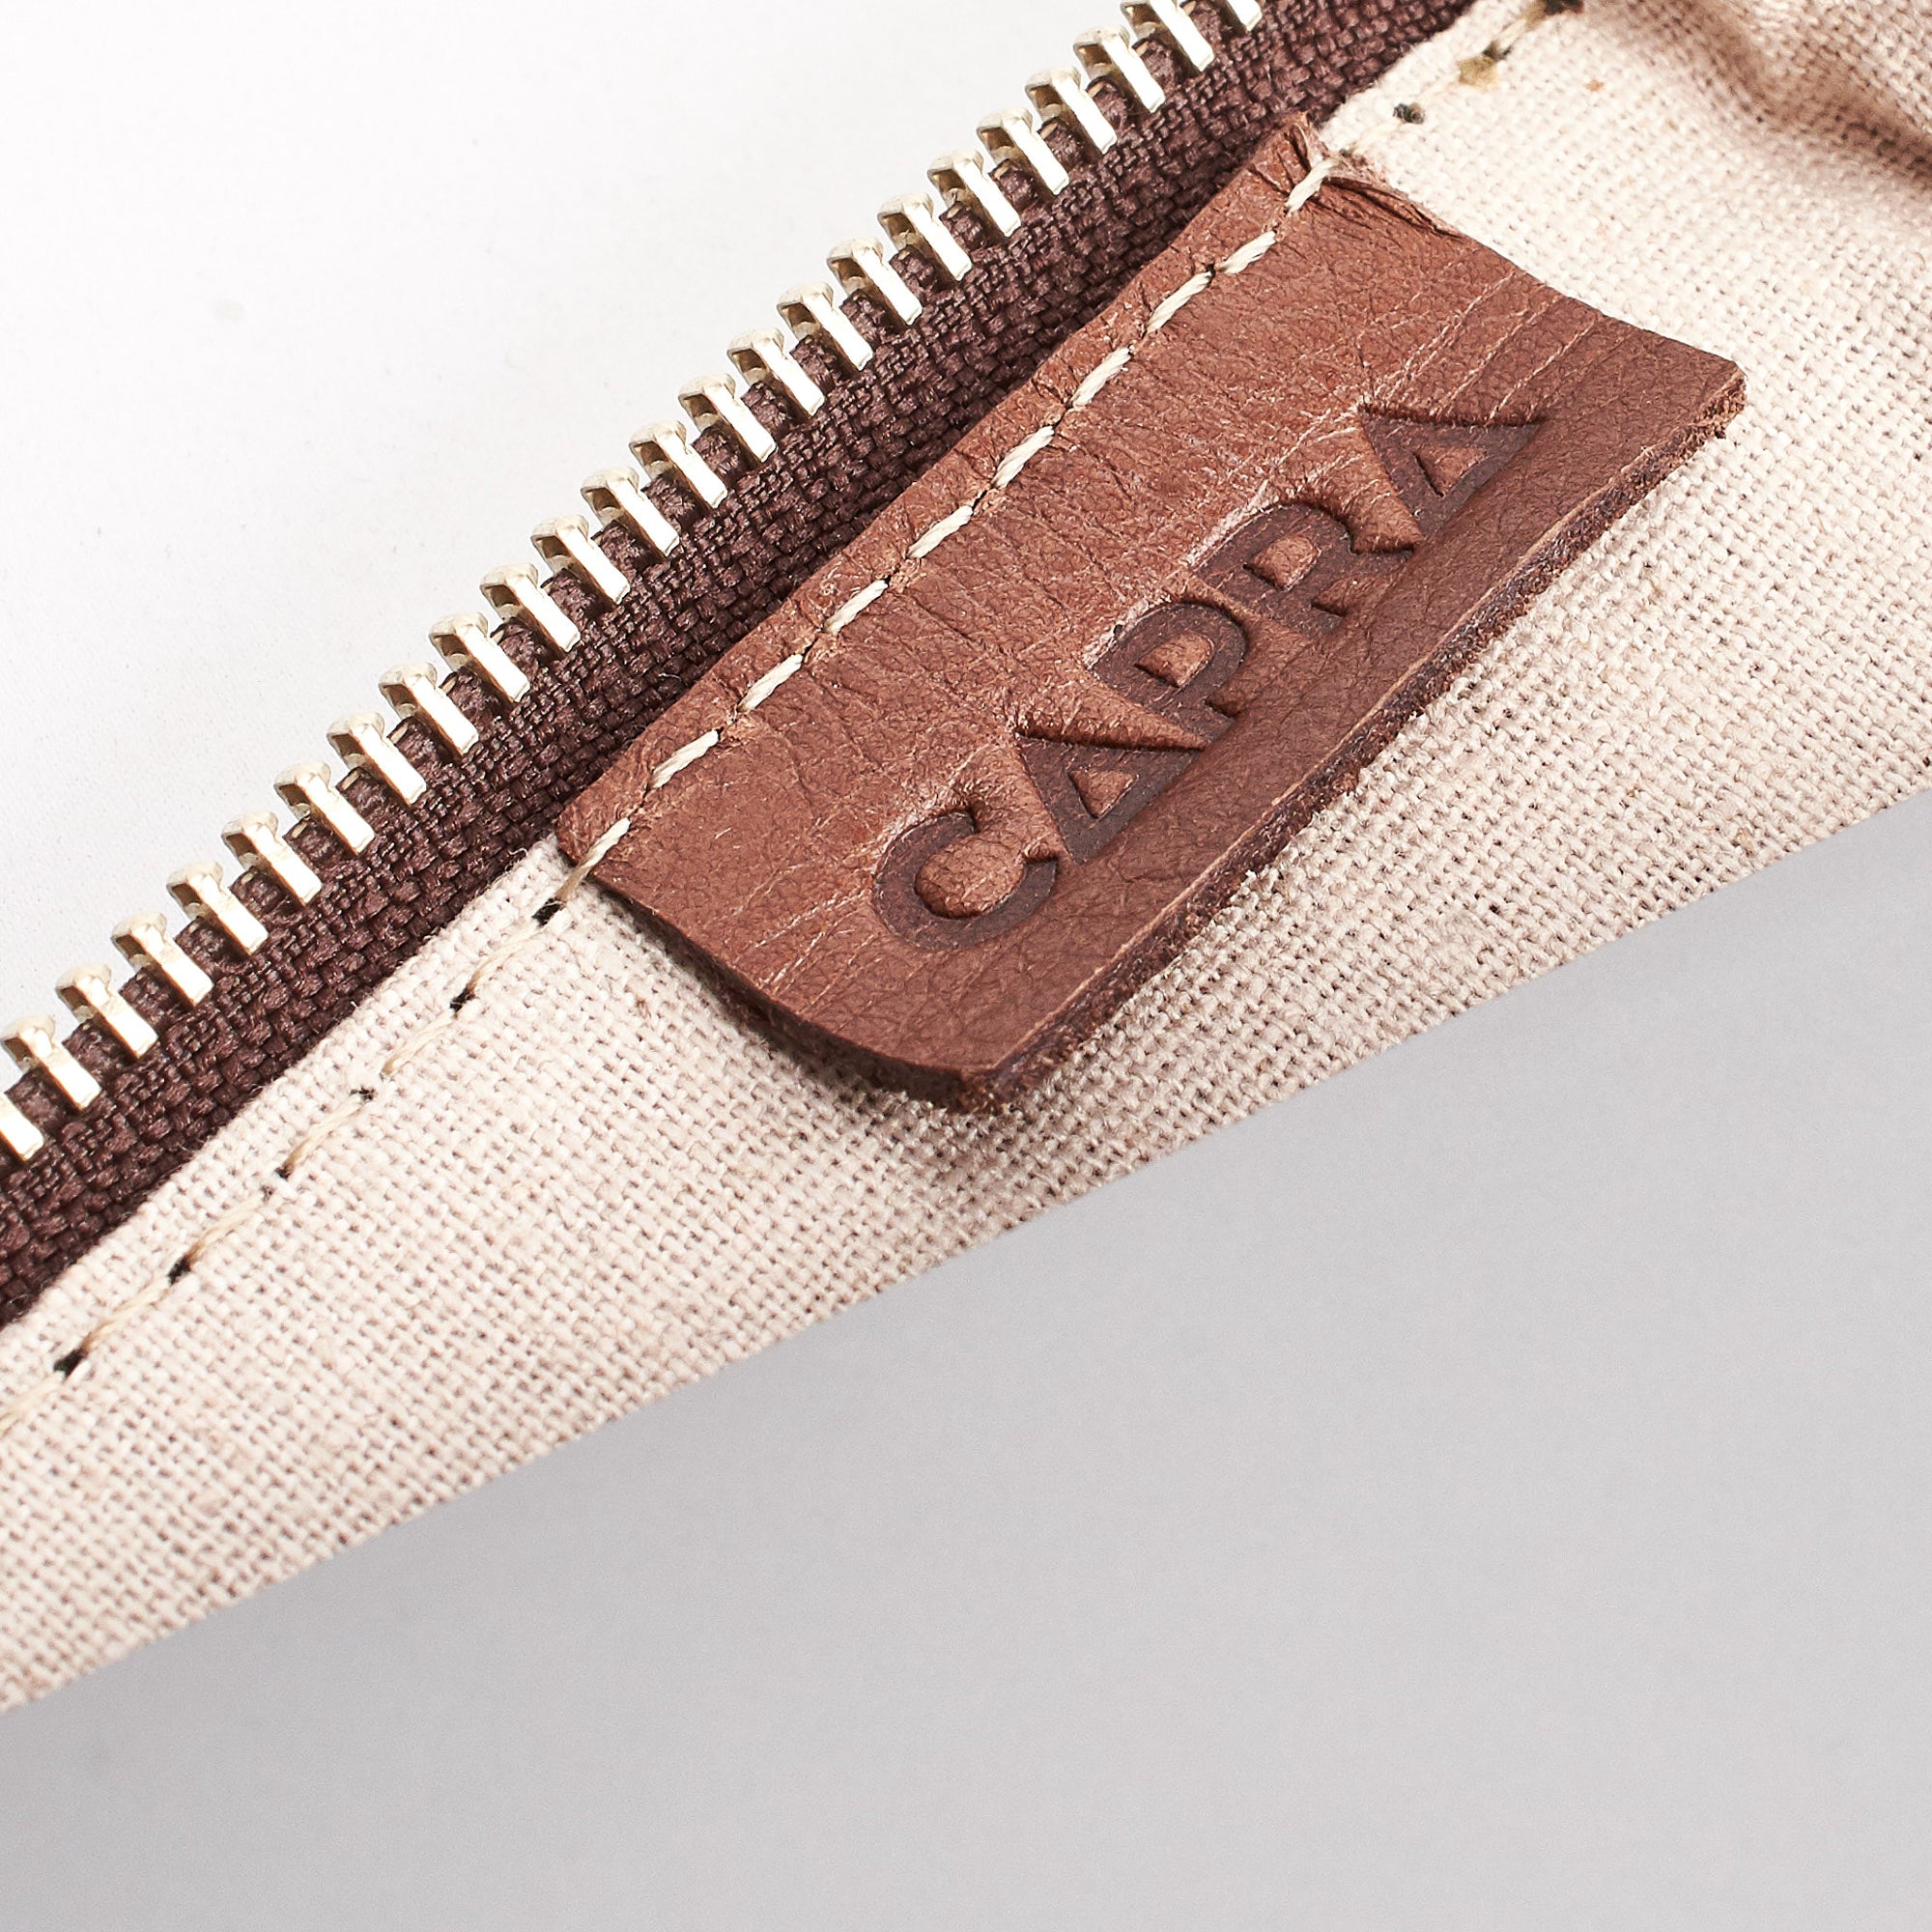 Leather detail. Business slim brown laptop bag folio. Device bag folio.